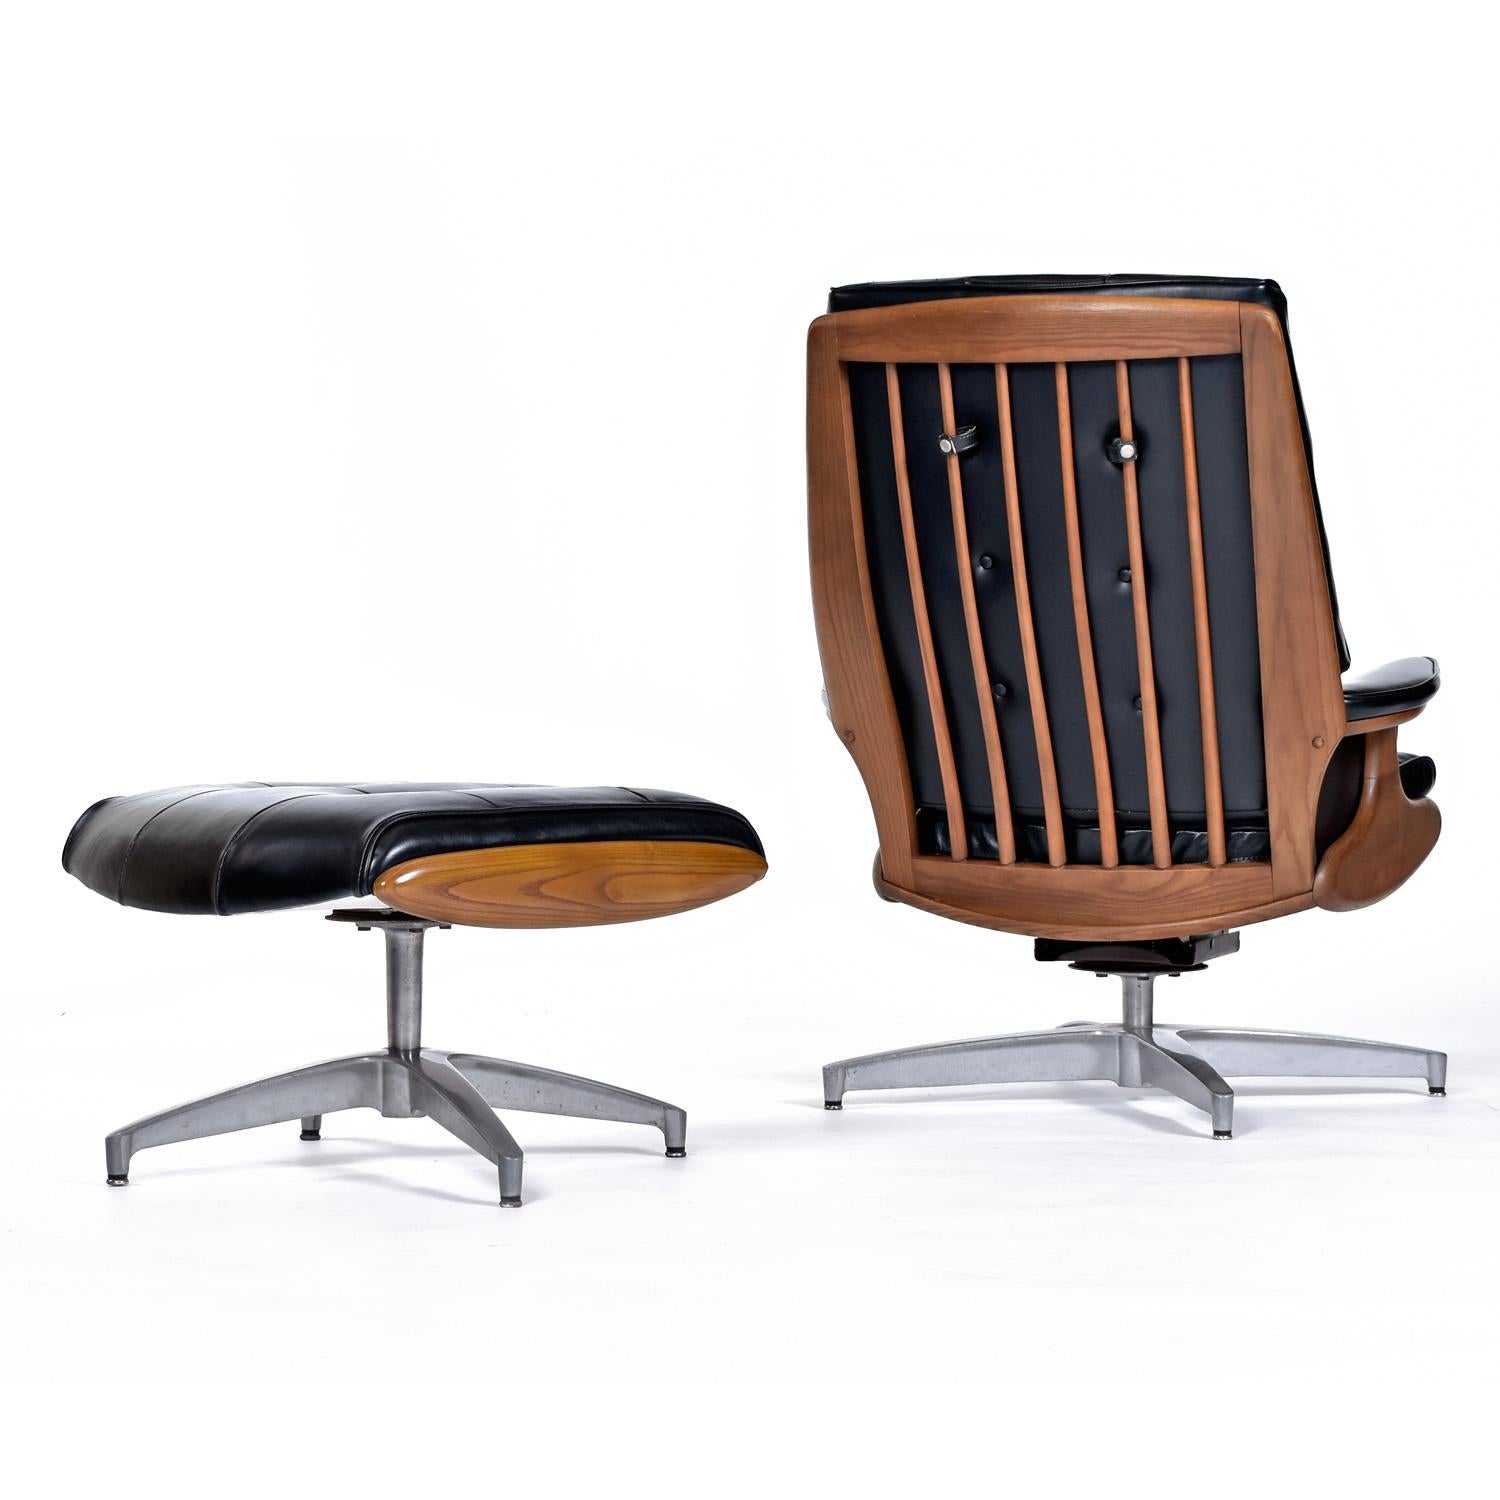 American Black Naugahyde Heywood Wakefield 710d Swivel Rocker Lounge Chair and Ottoman